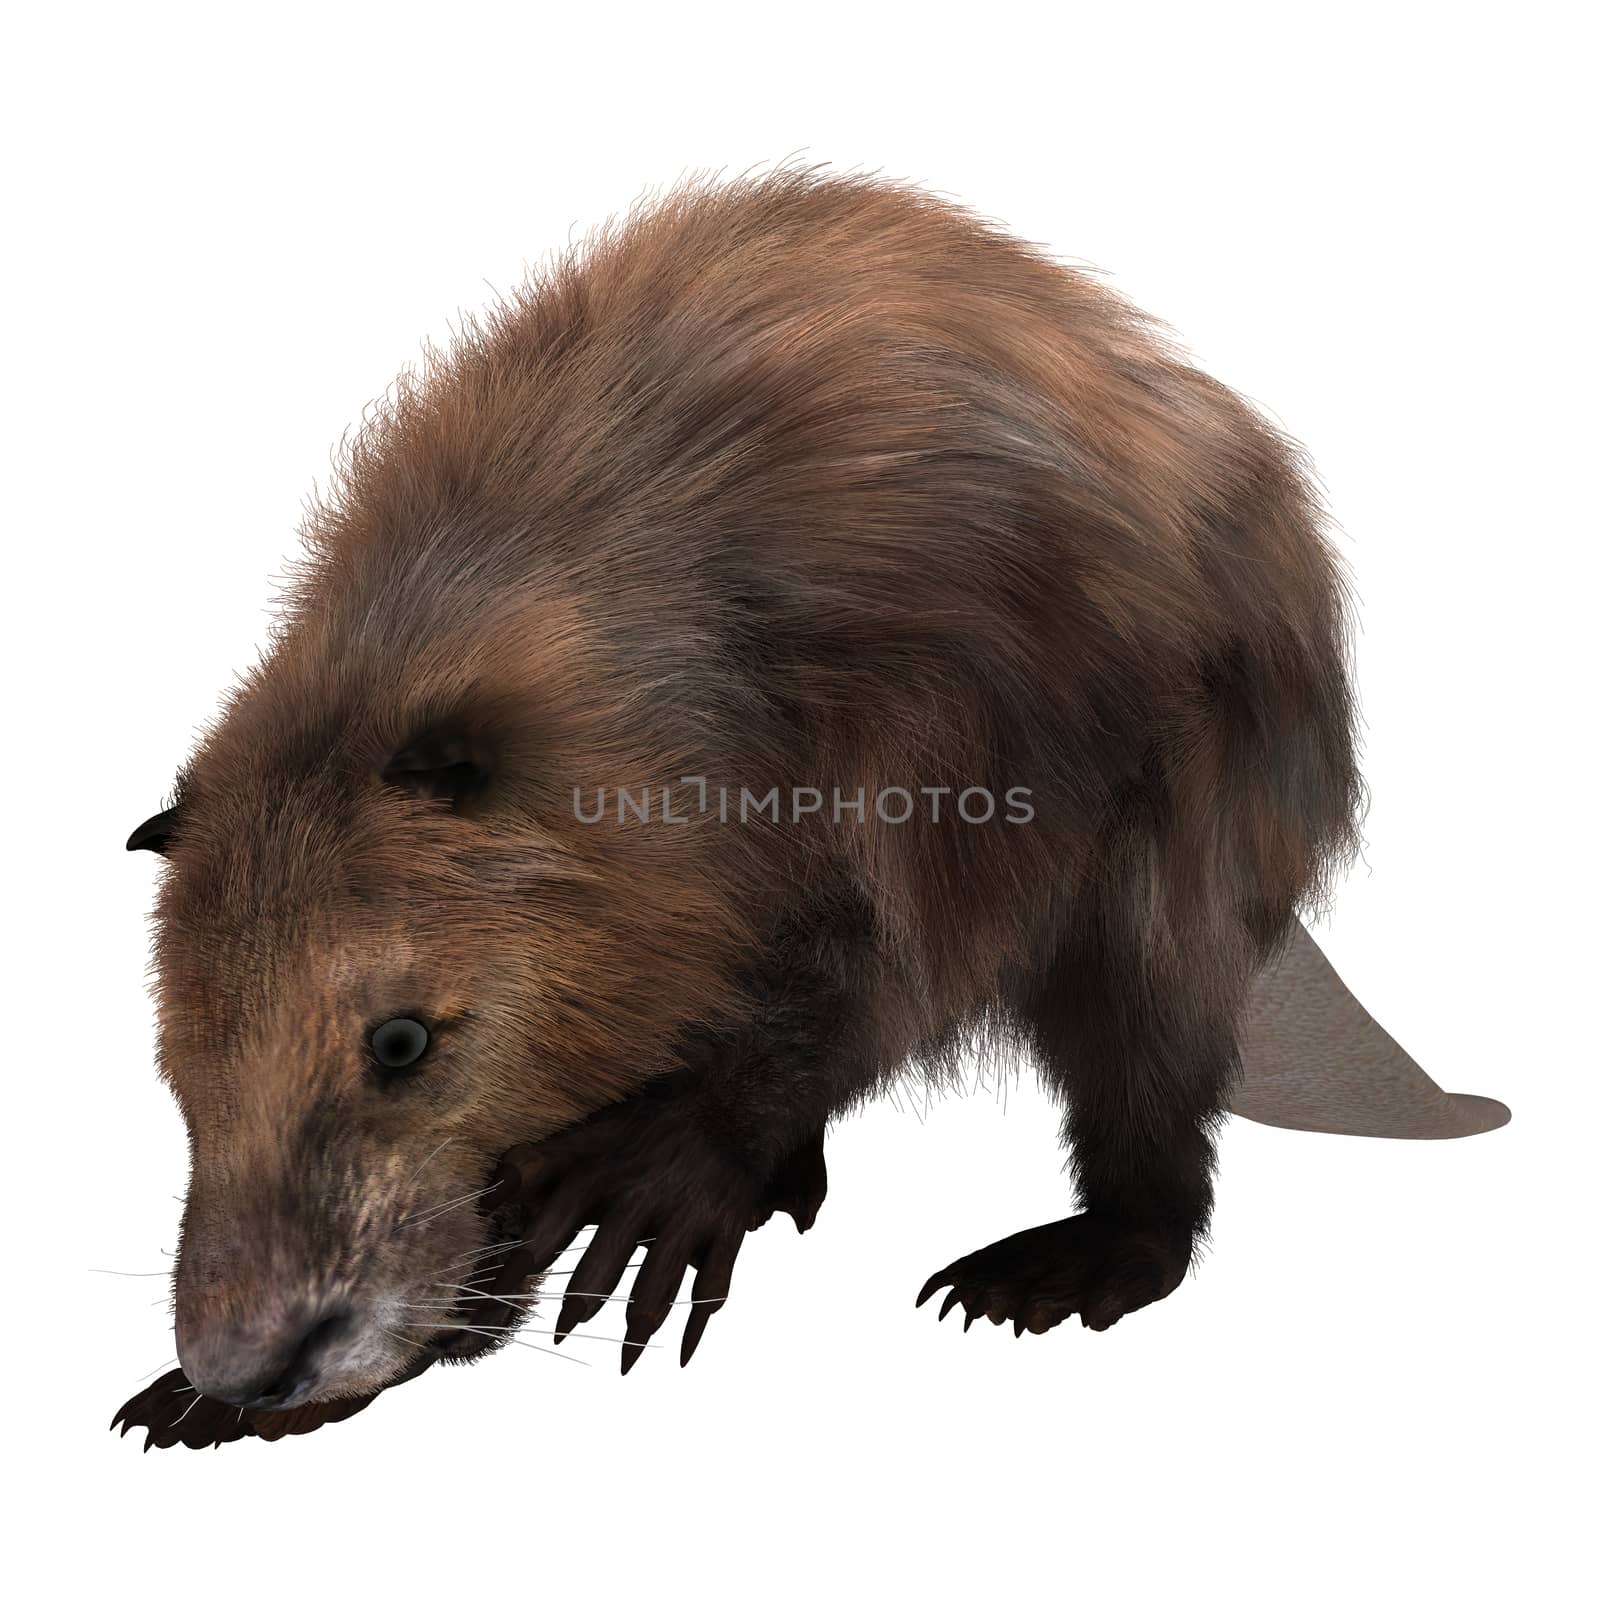 Beaver by Vac